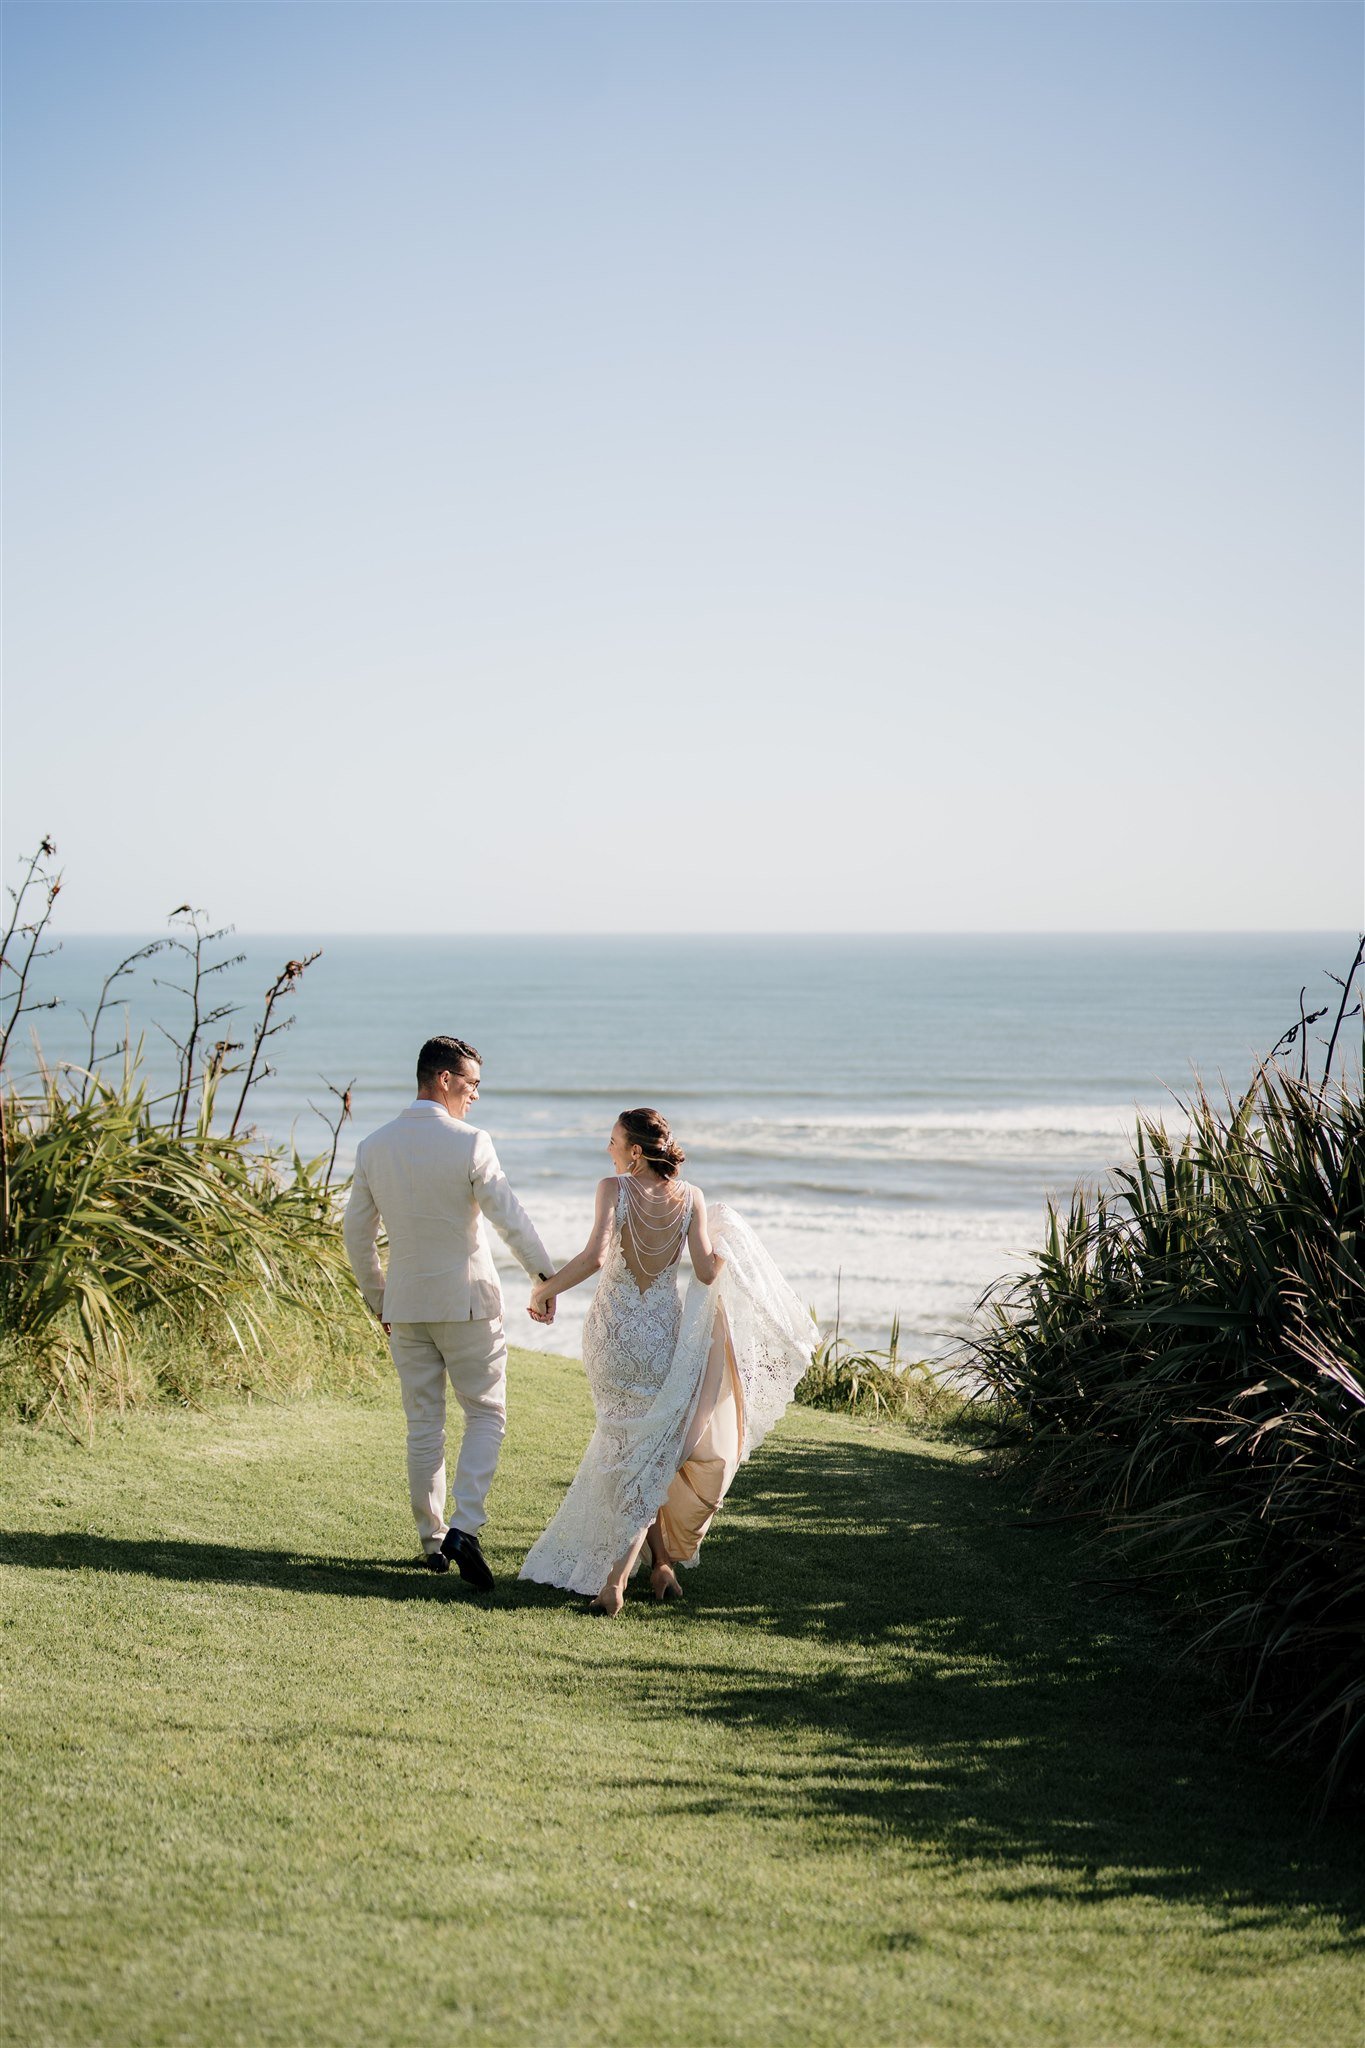 castaways-NZ-new-zealand-auckland-wedding-photographer-photography-videography-film-dear-white-productions-best-venue-waiuku-engagement-elopement-style-beach-intimate (229).jpg